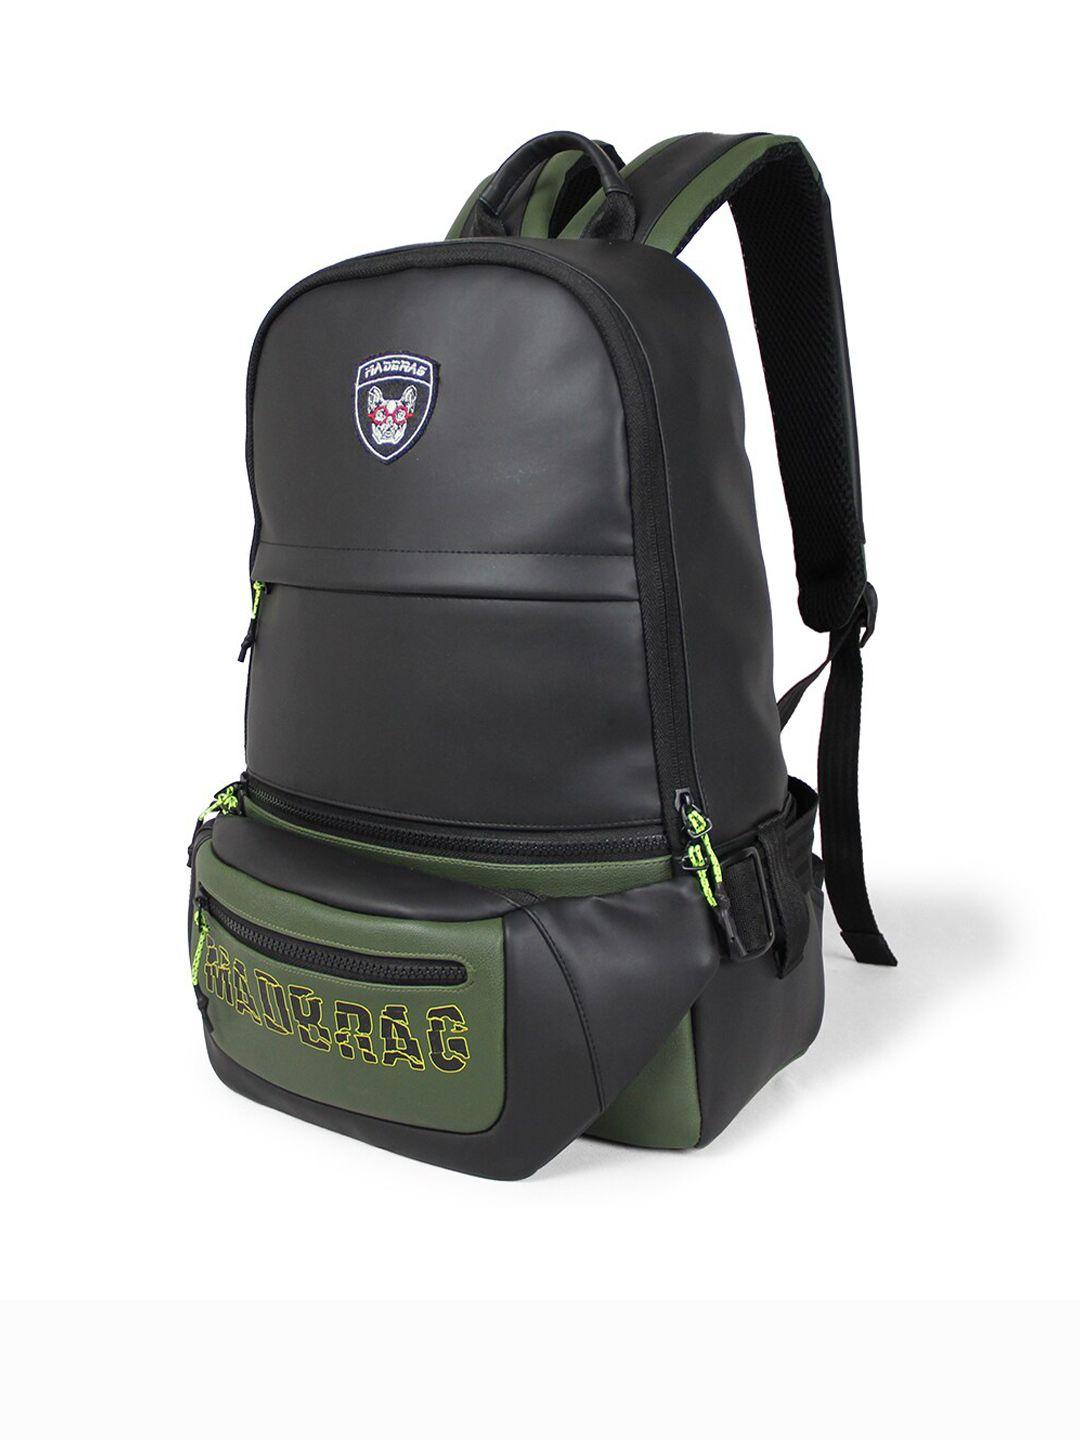 madbrag unisex black & green colourblocked backpack